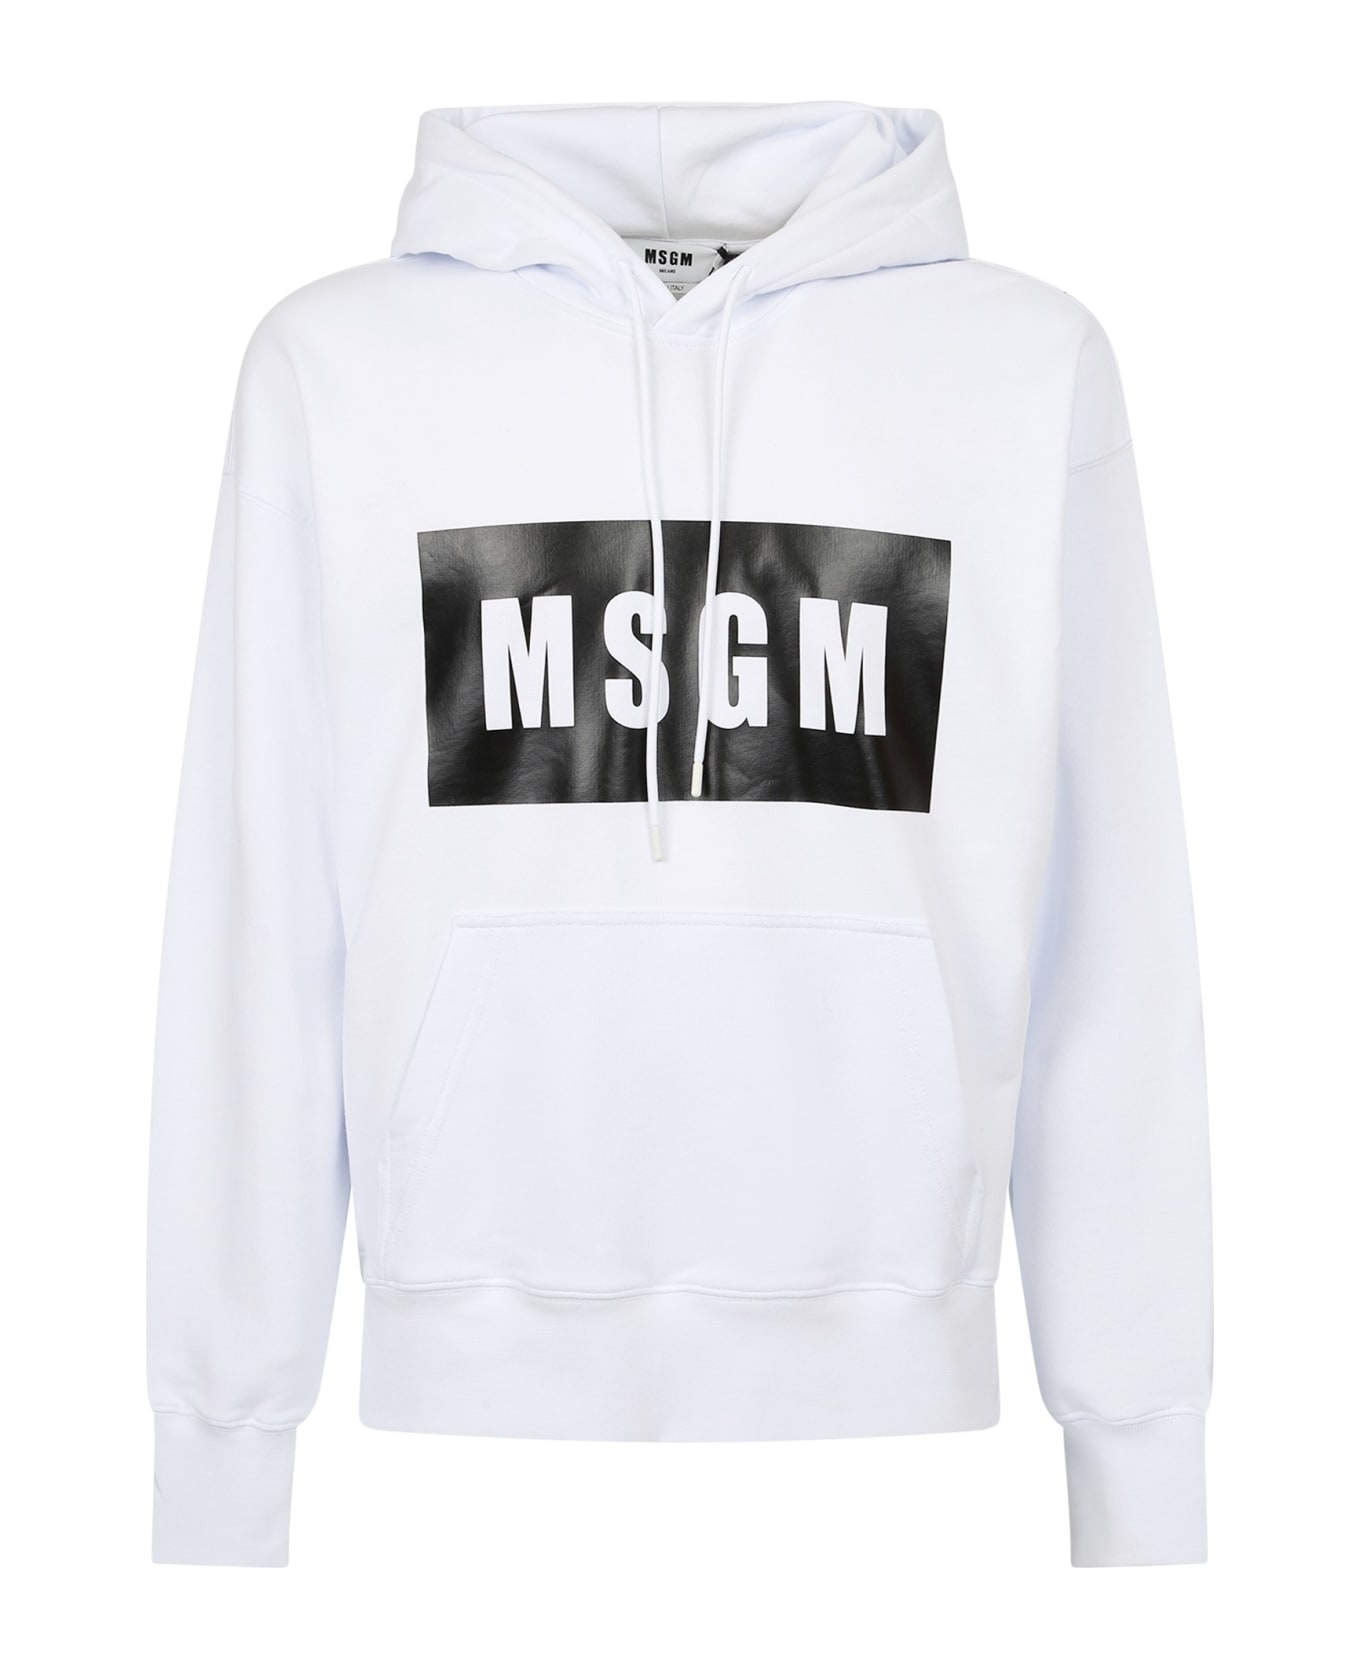 MSGM Branded Sweatshirt - White